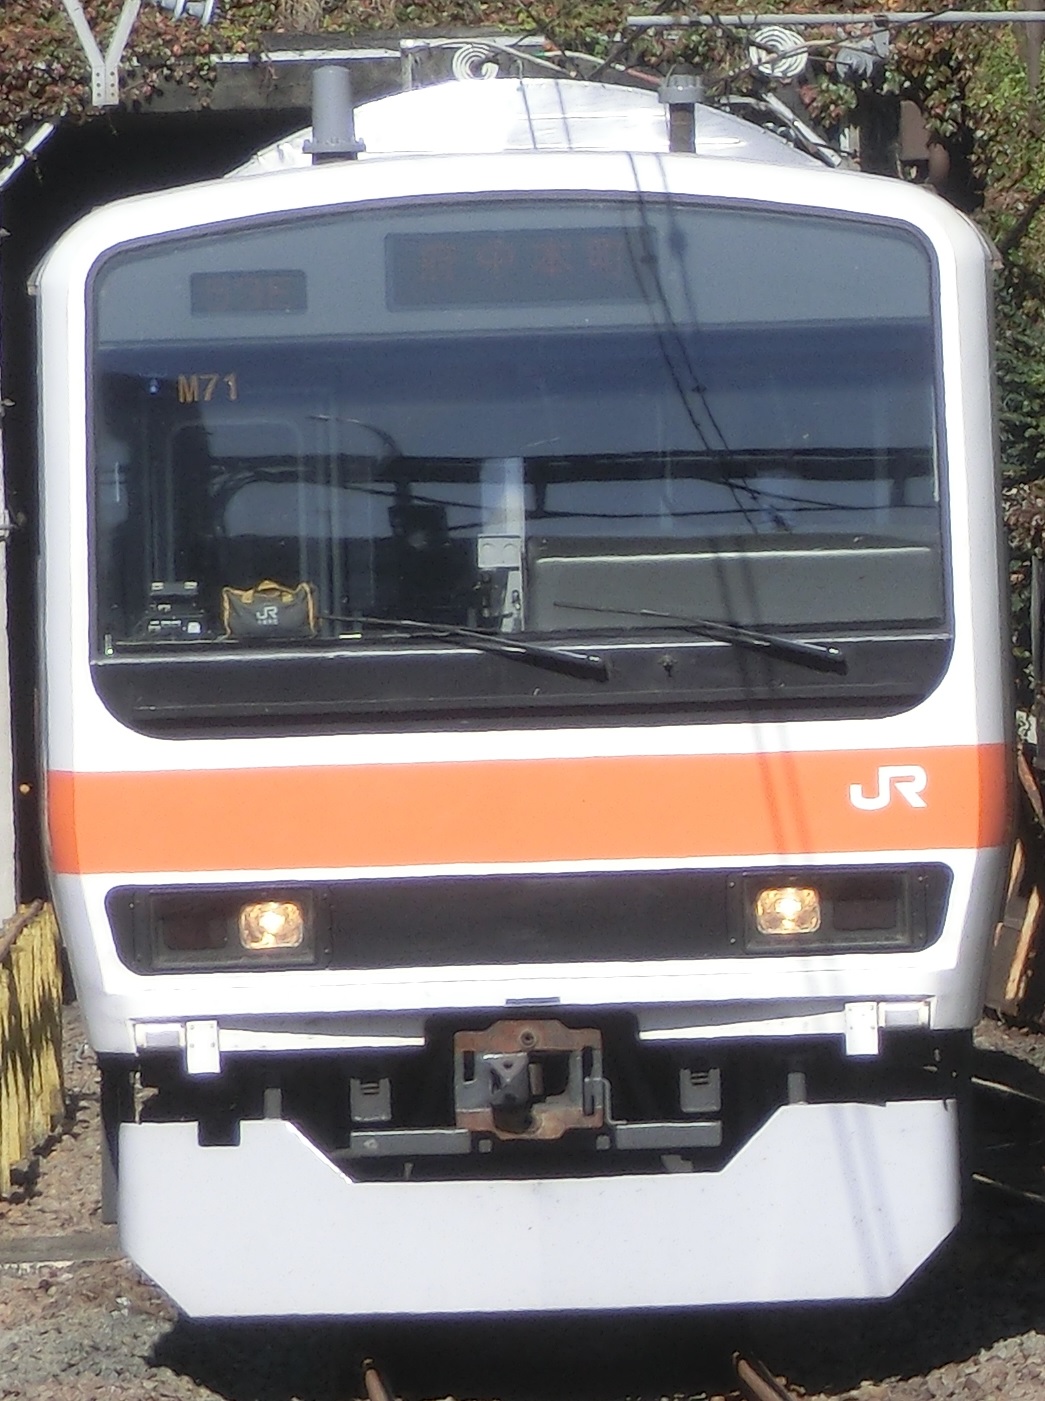 209-M71-3.jpg